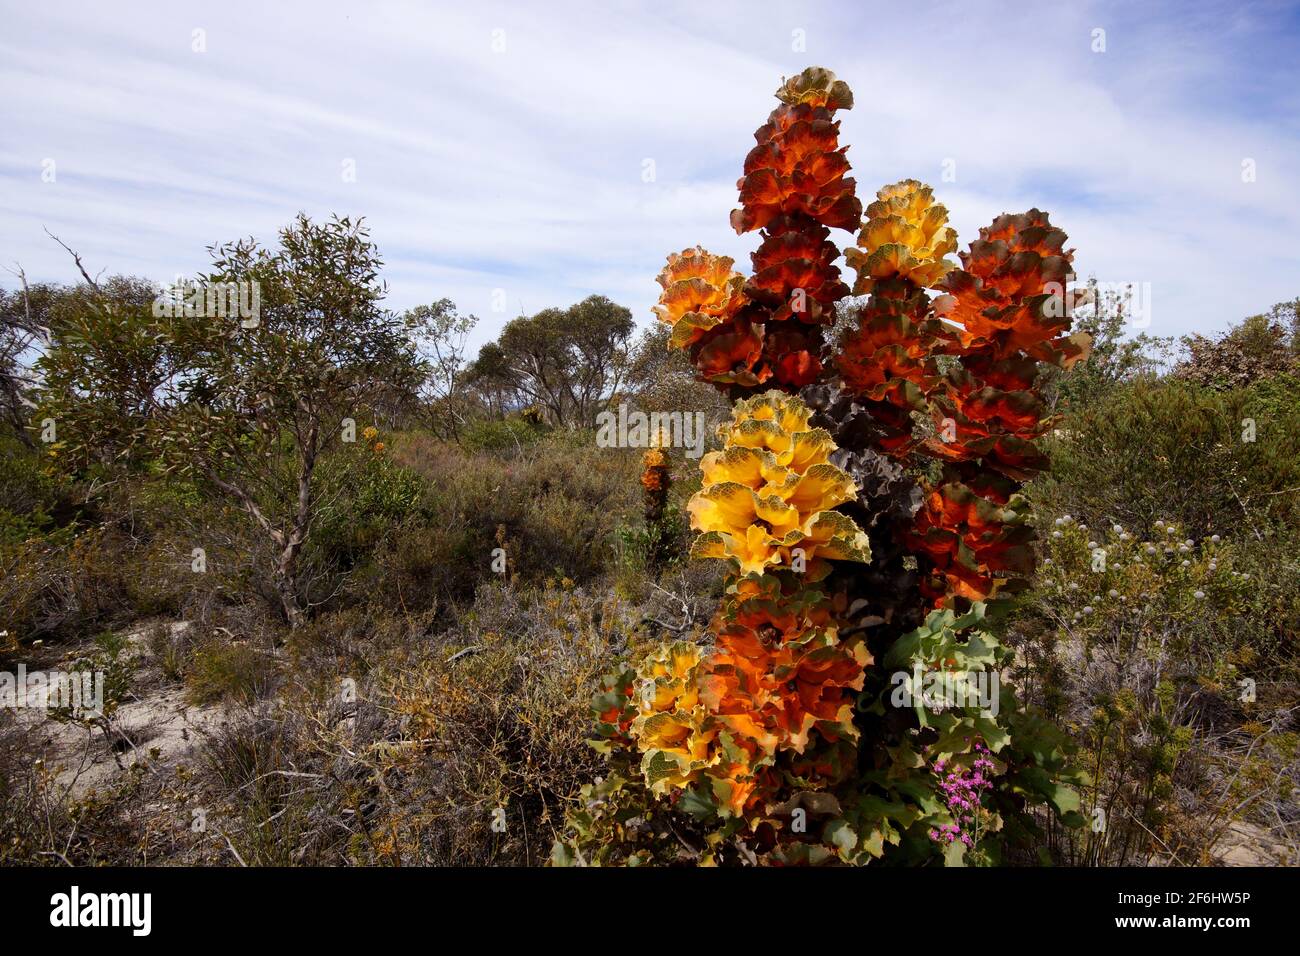 Royal Hakea shrub with yellow and orange foliage in bushland near Hopetoun, Western Australia Stock Photo